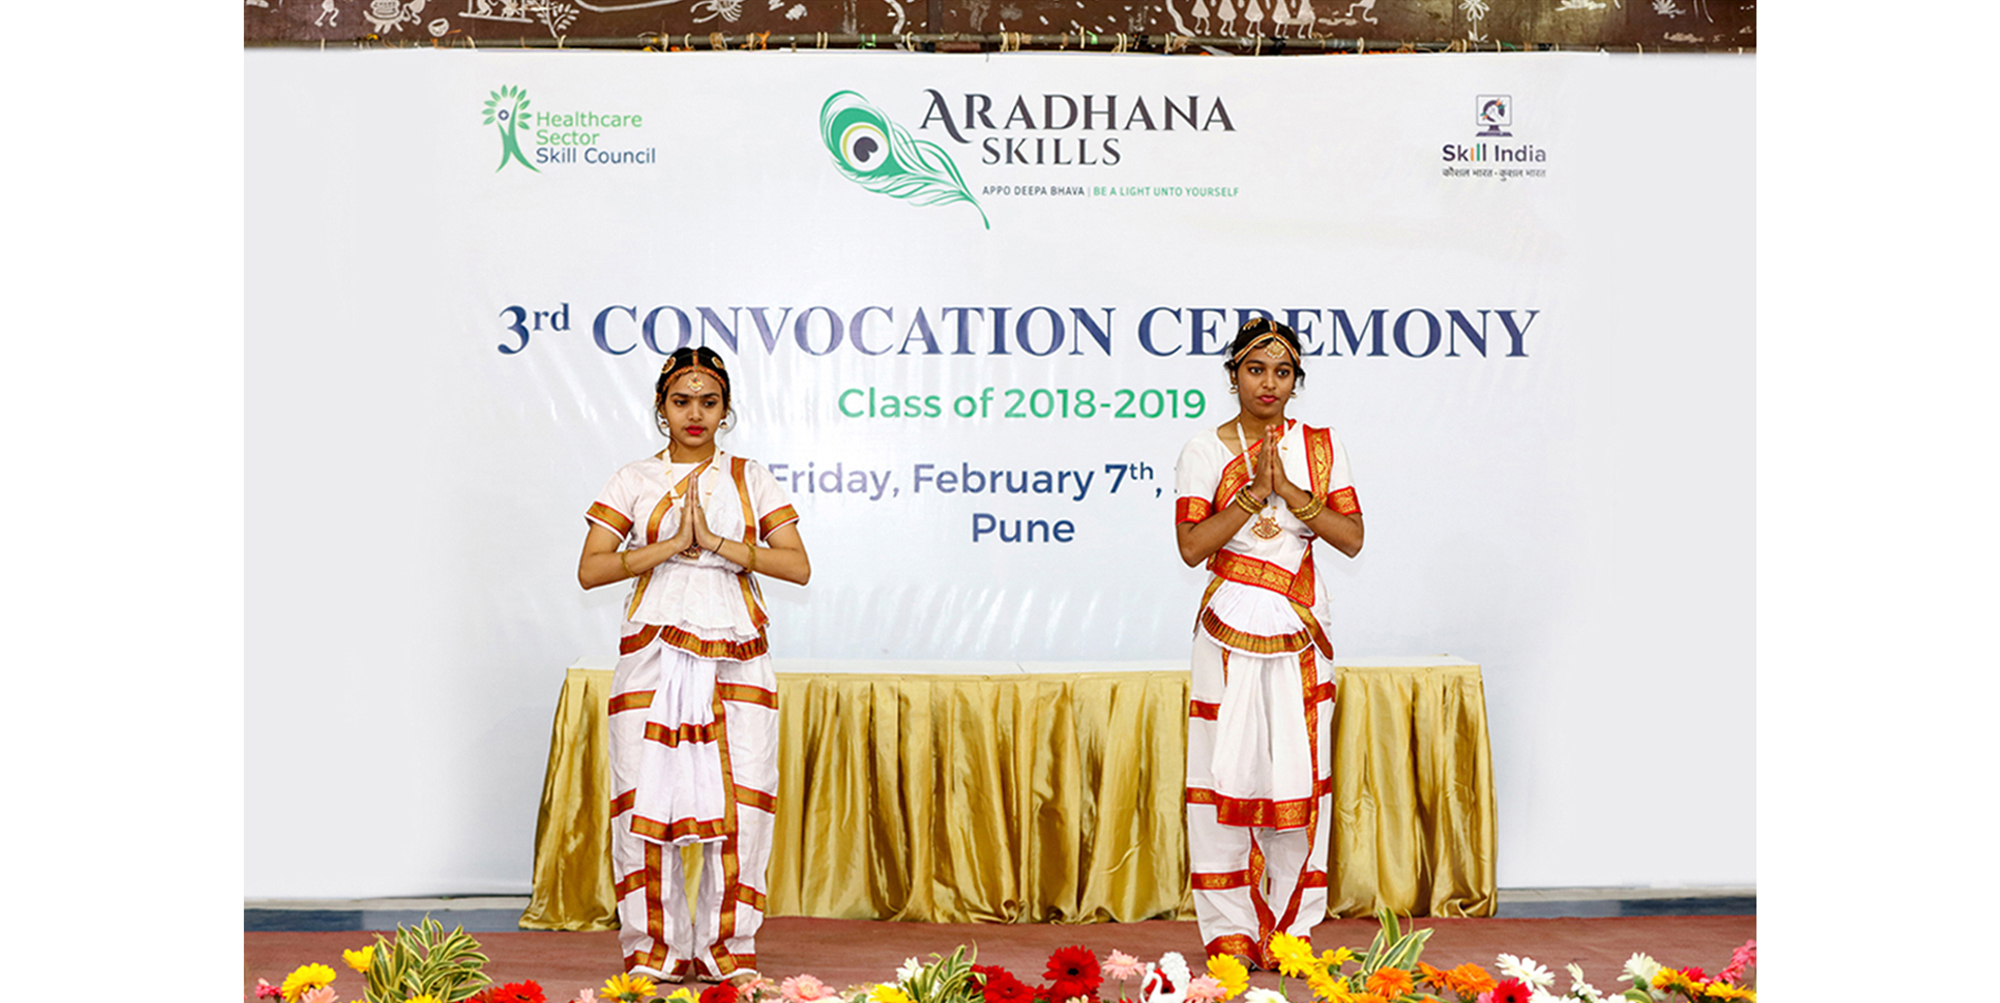 Aradhana Skills Convocation Ceremony